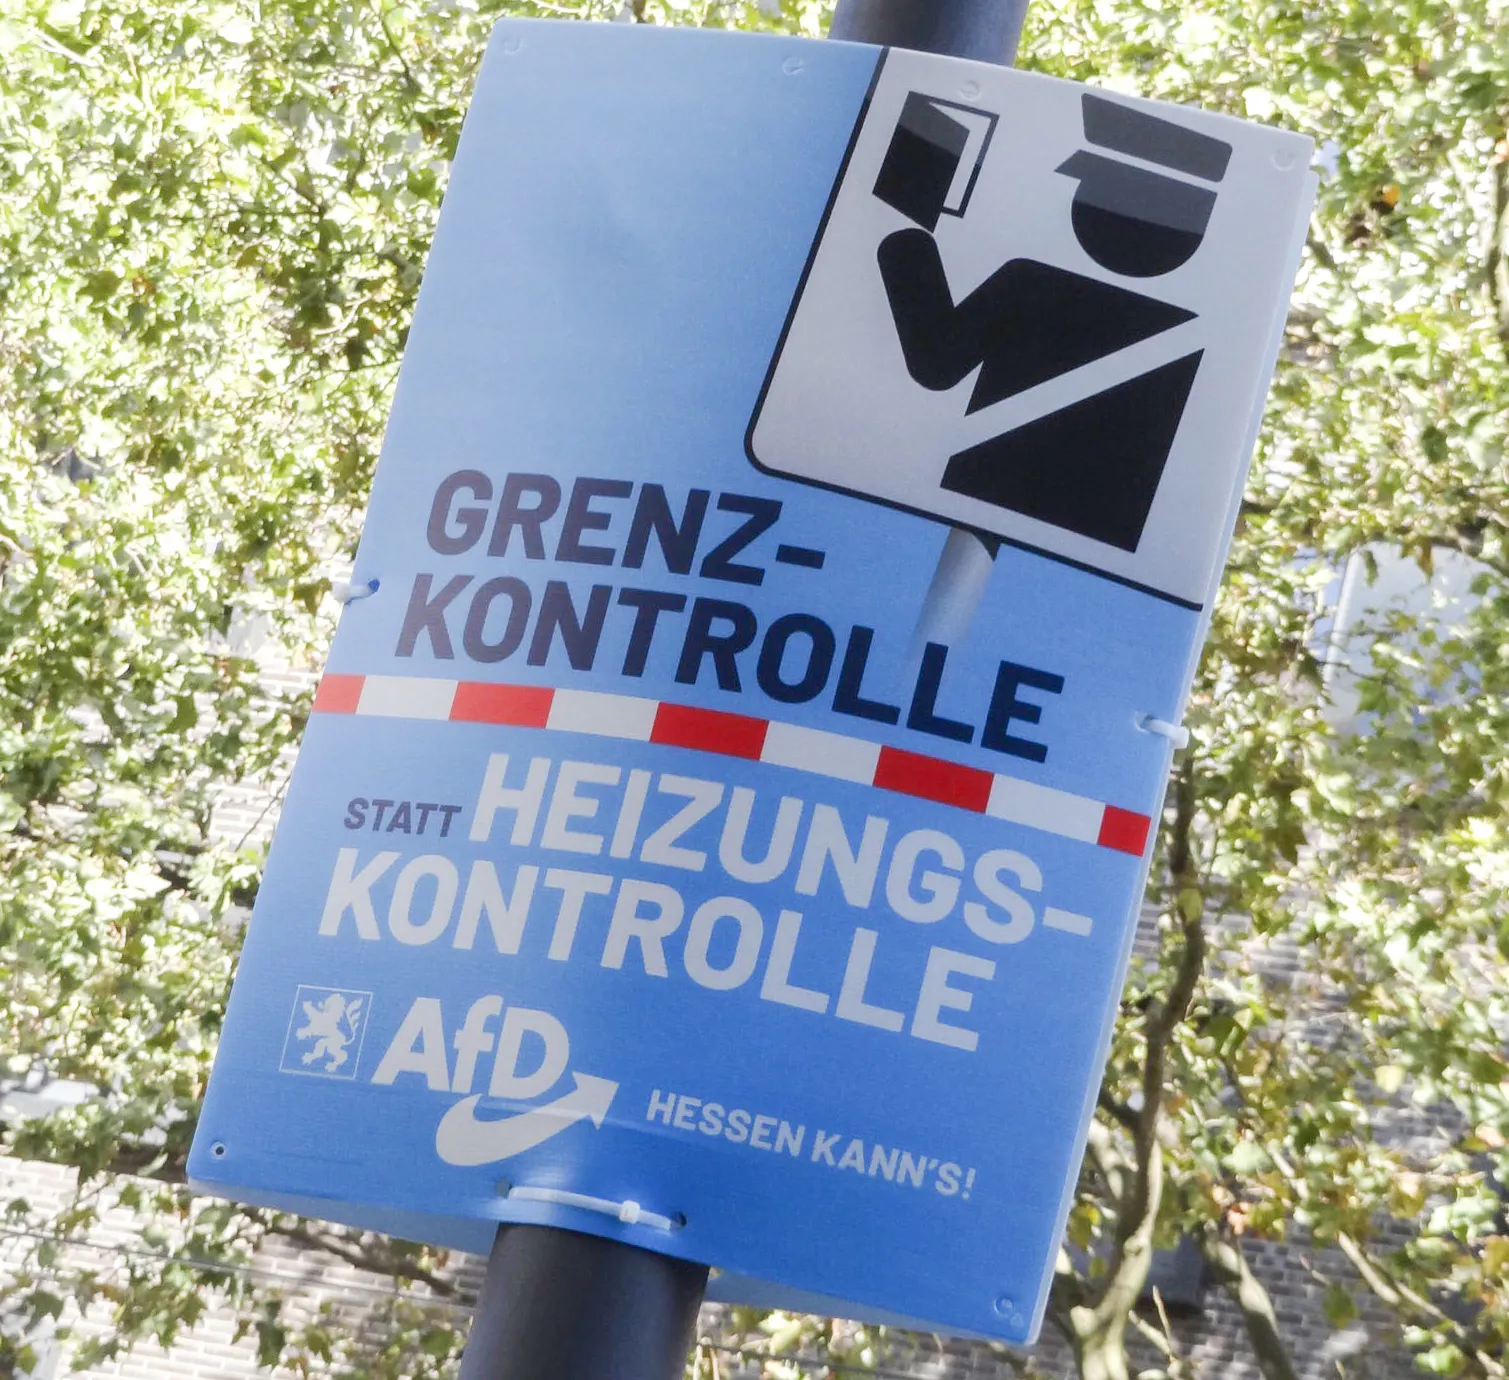 AfD-Plakat: "Grenzkontrolle statt Heizungskontrolle"